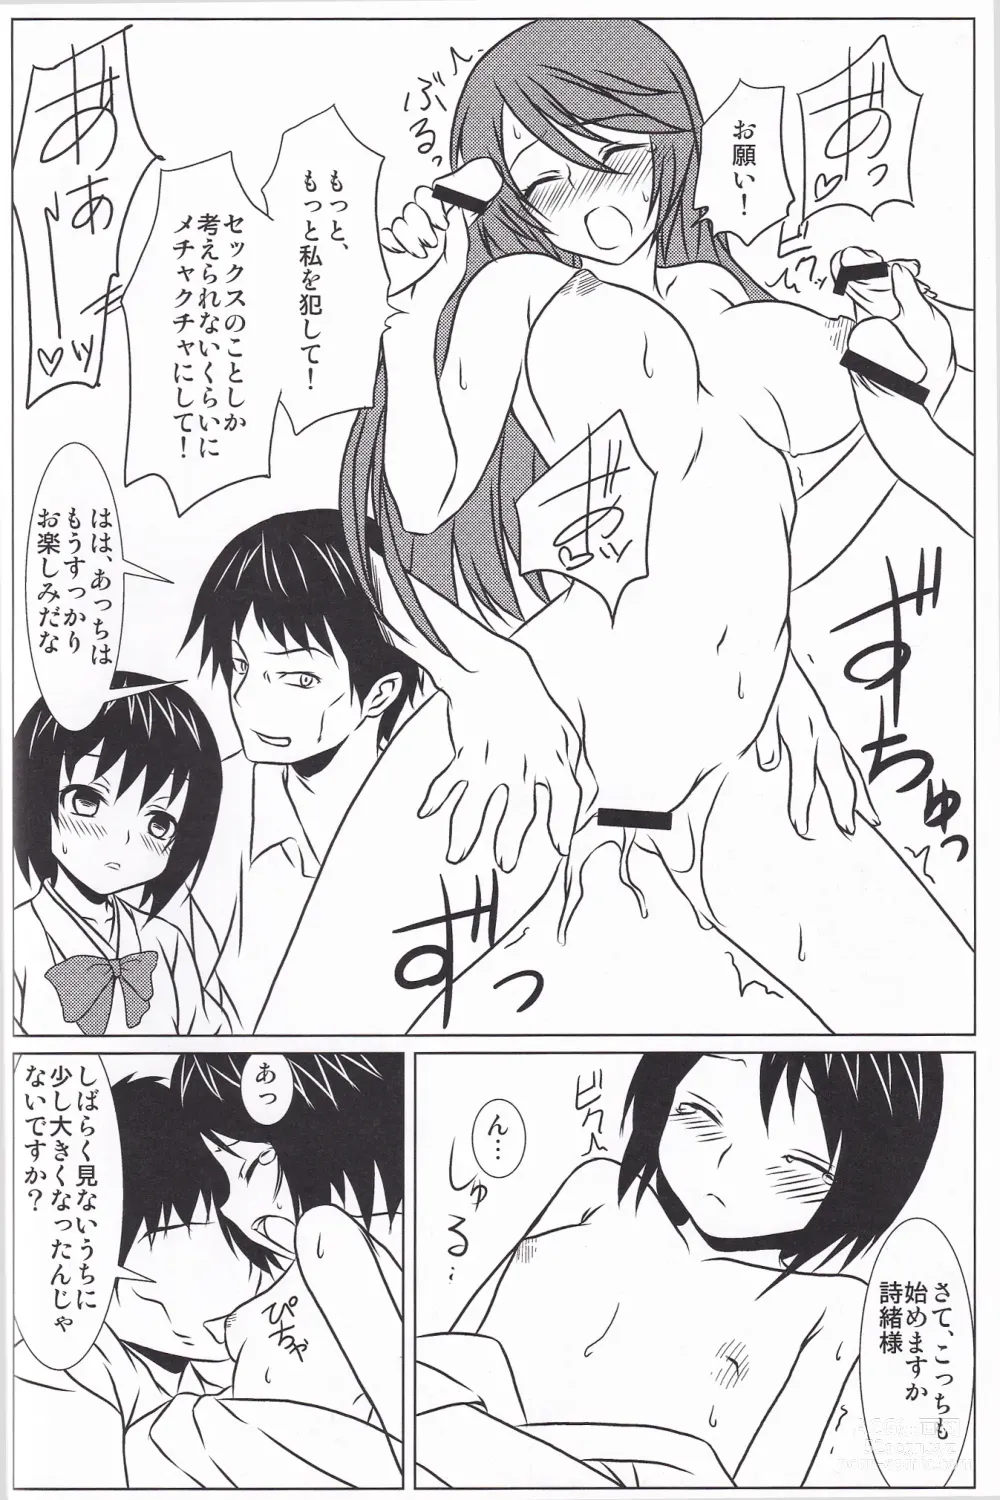 Page 23 of doujinshi Hibi no Uta